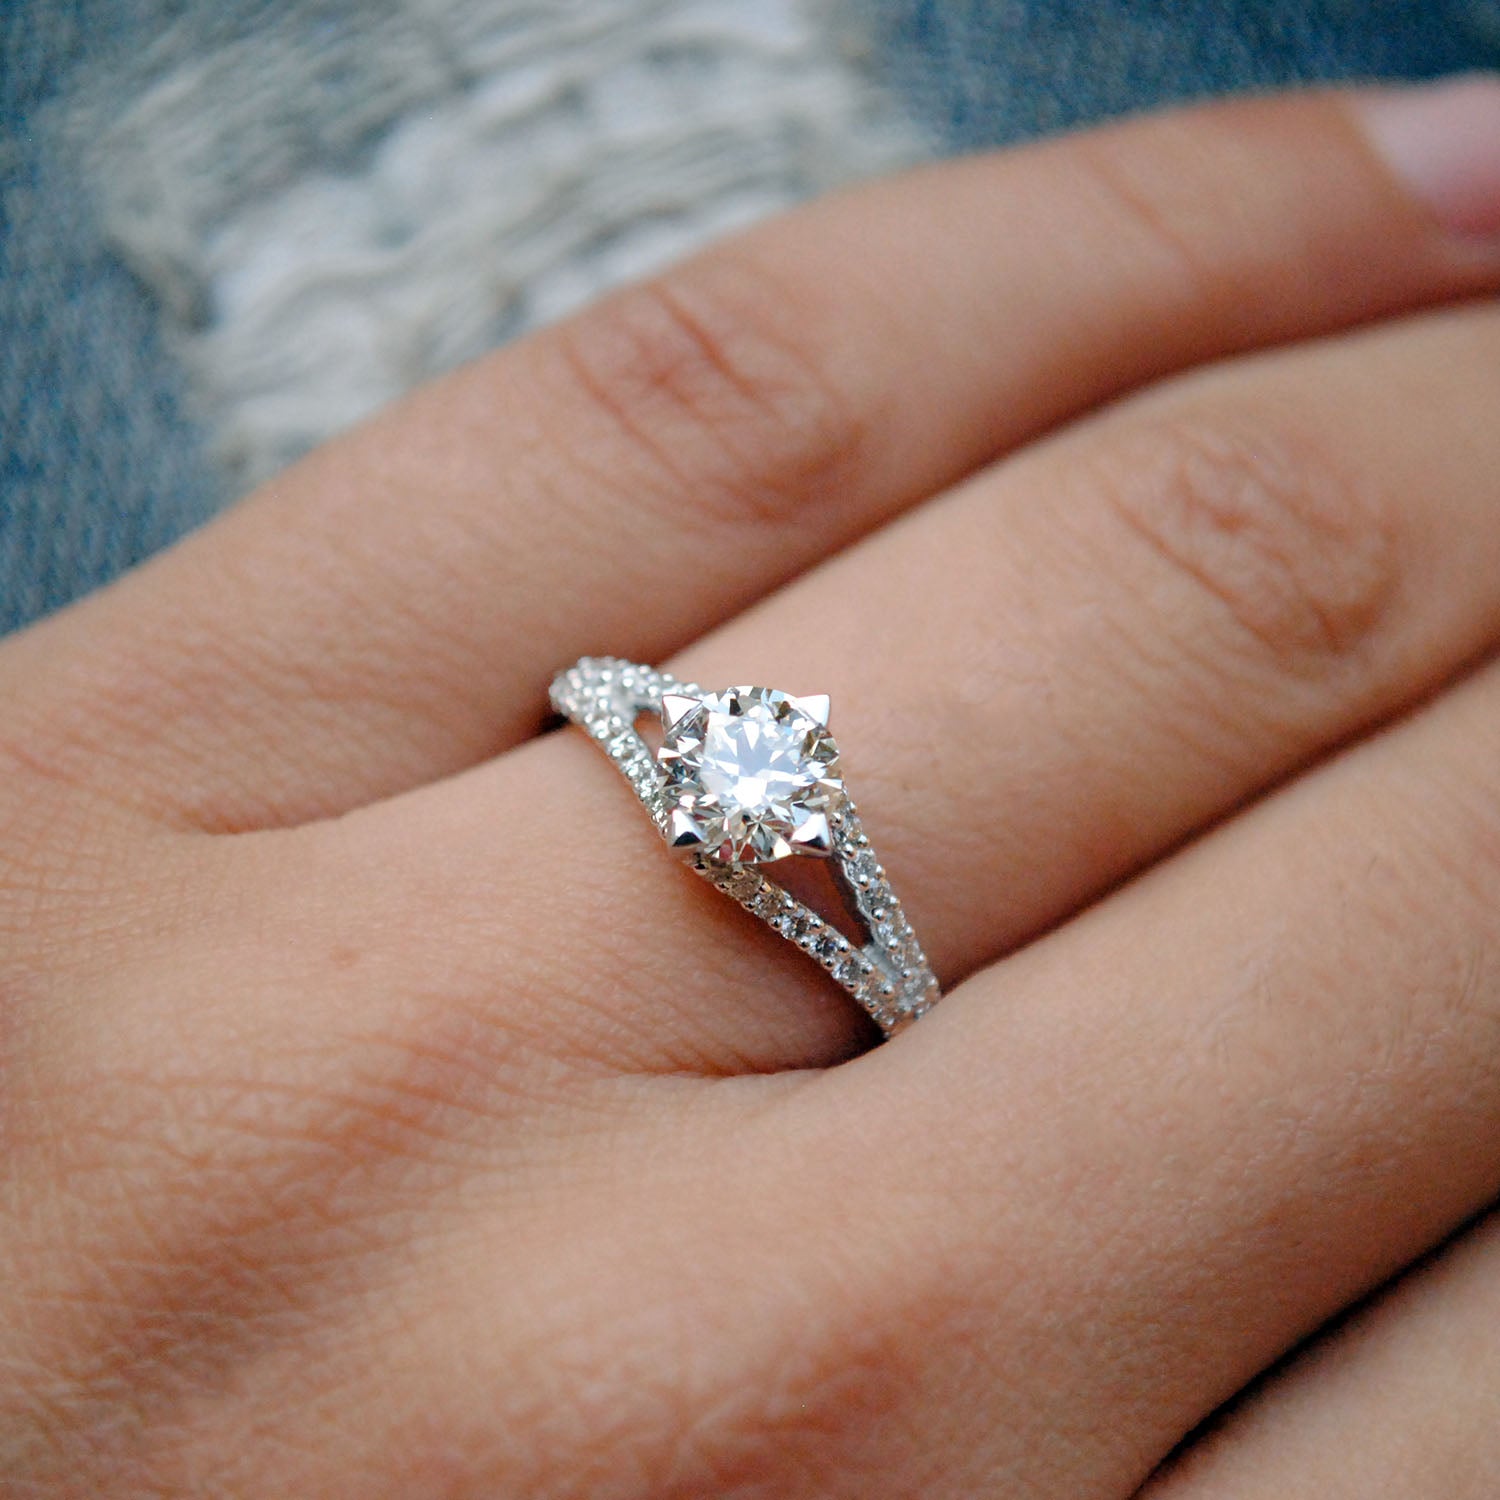 1 Carat Princess Cut Solitaire Diamond Ring | Barkev's